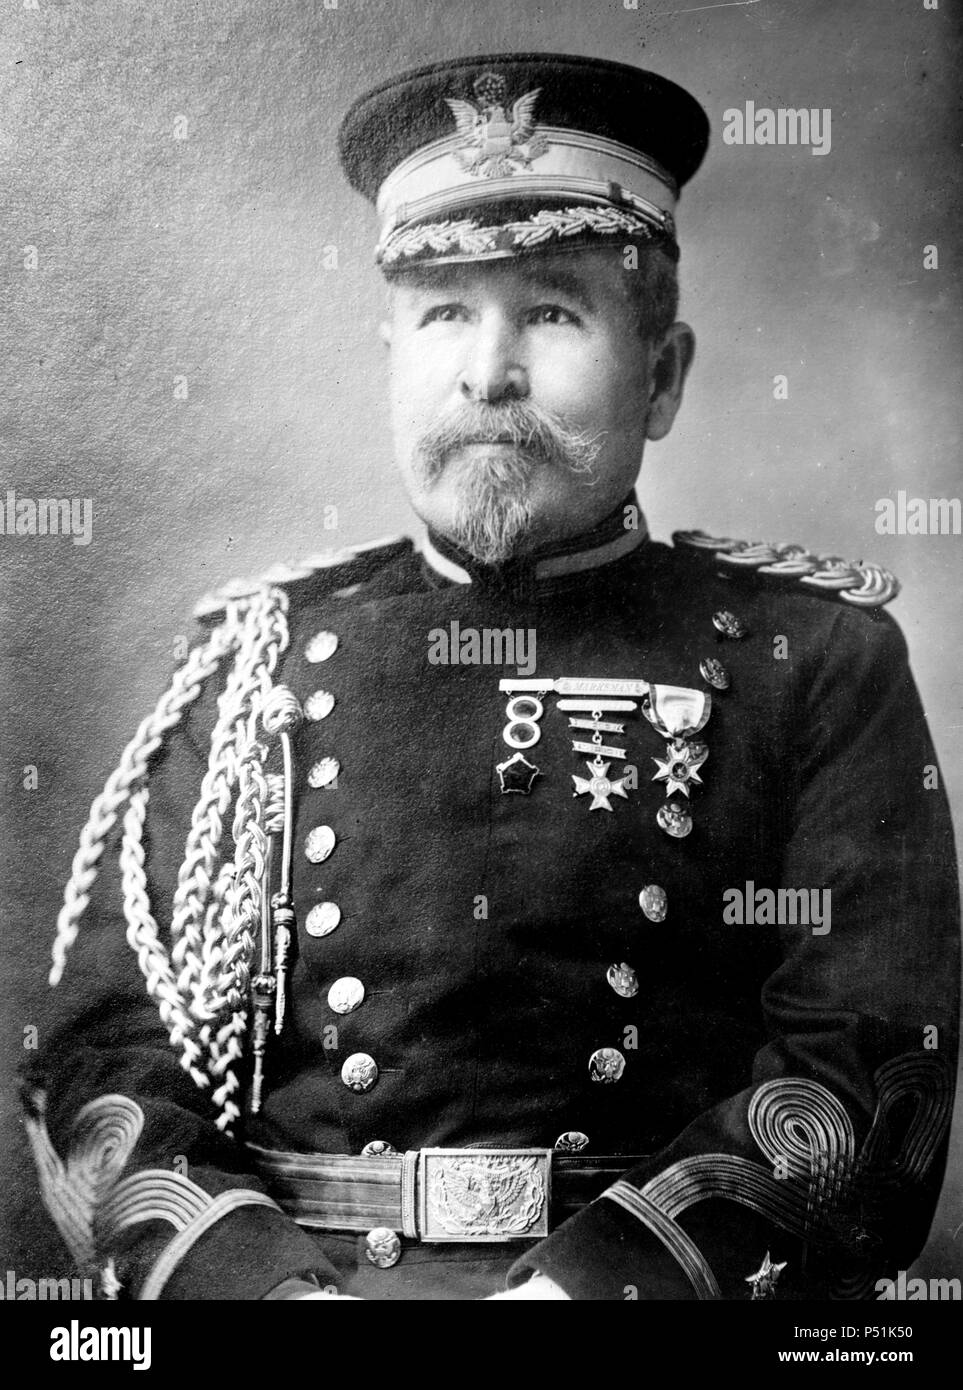 Brig. Gen. Joseph W. Duncan in uniform 12 31 1910 Stock Photo